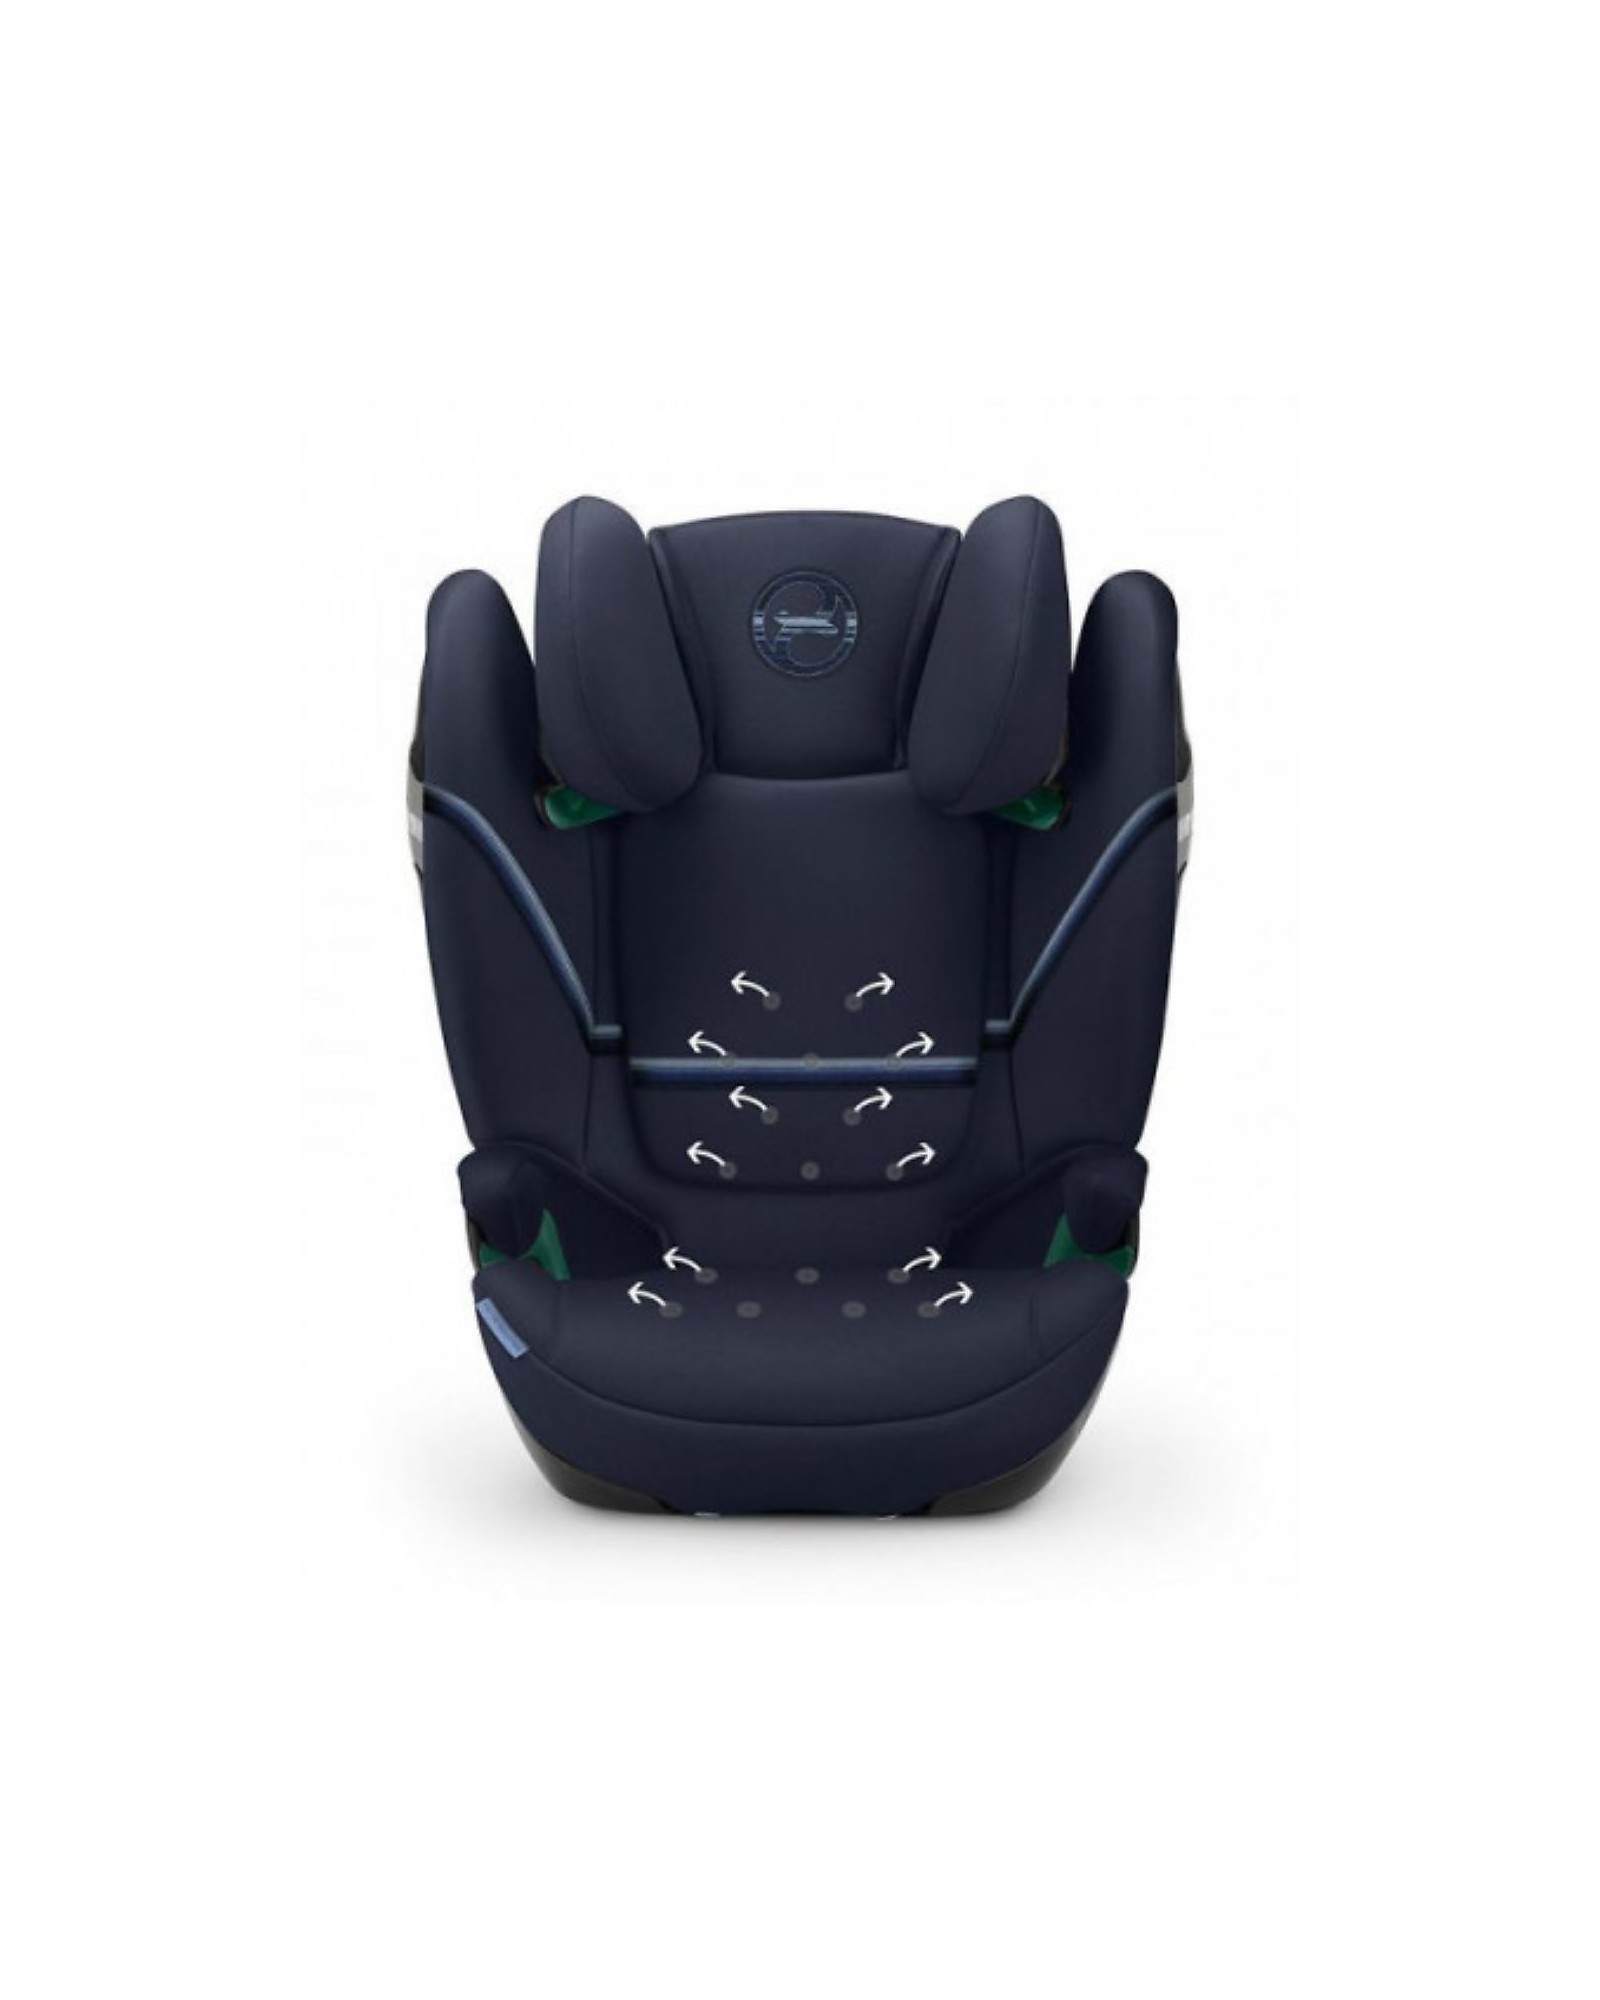 CYBEX SOLUTION S2 I-FIX Car Seat - Ocean Blue